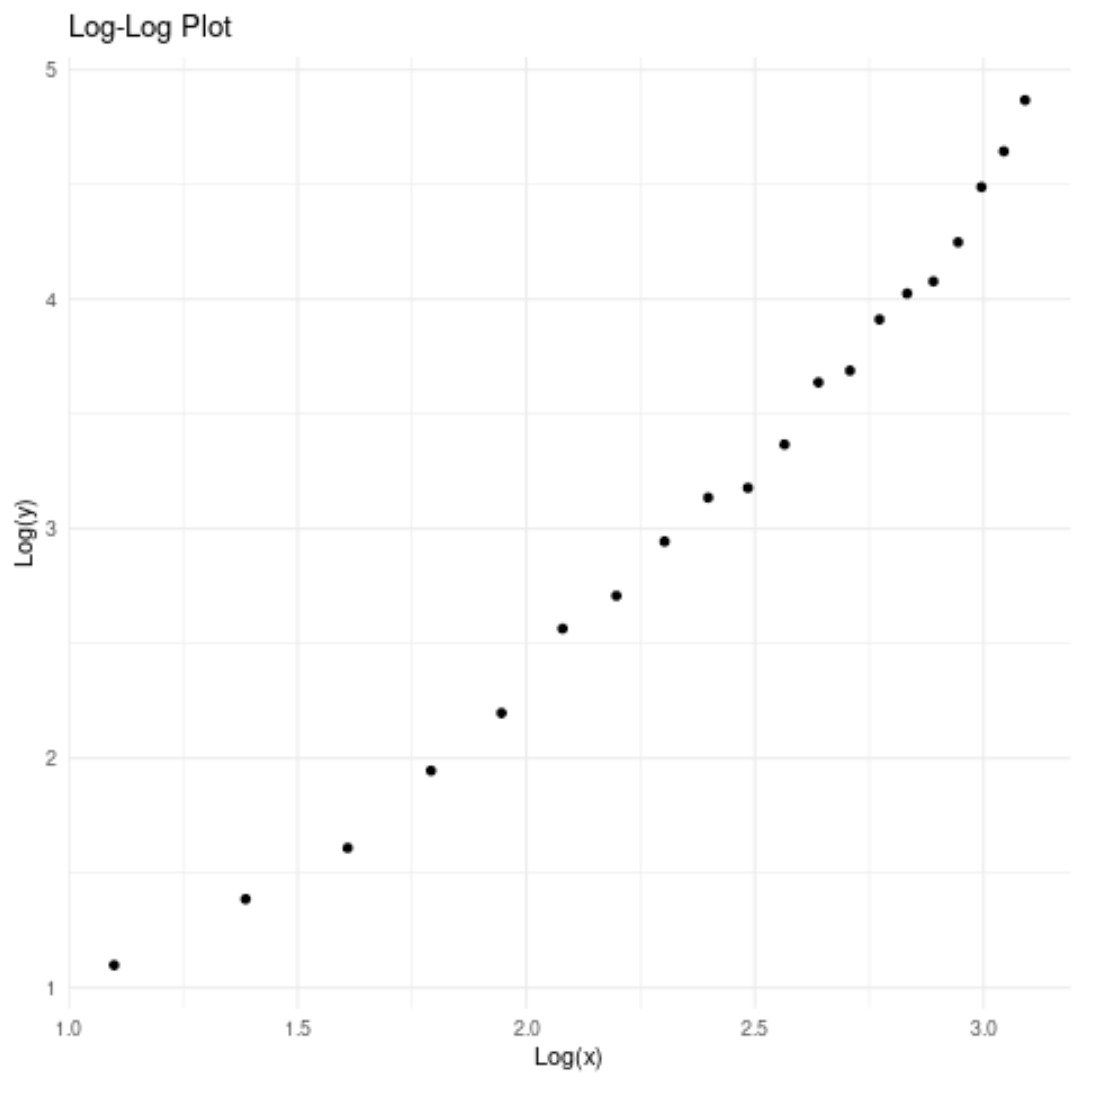 Log-log plot in R using ggplot2